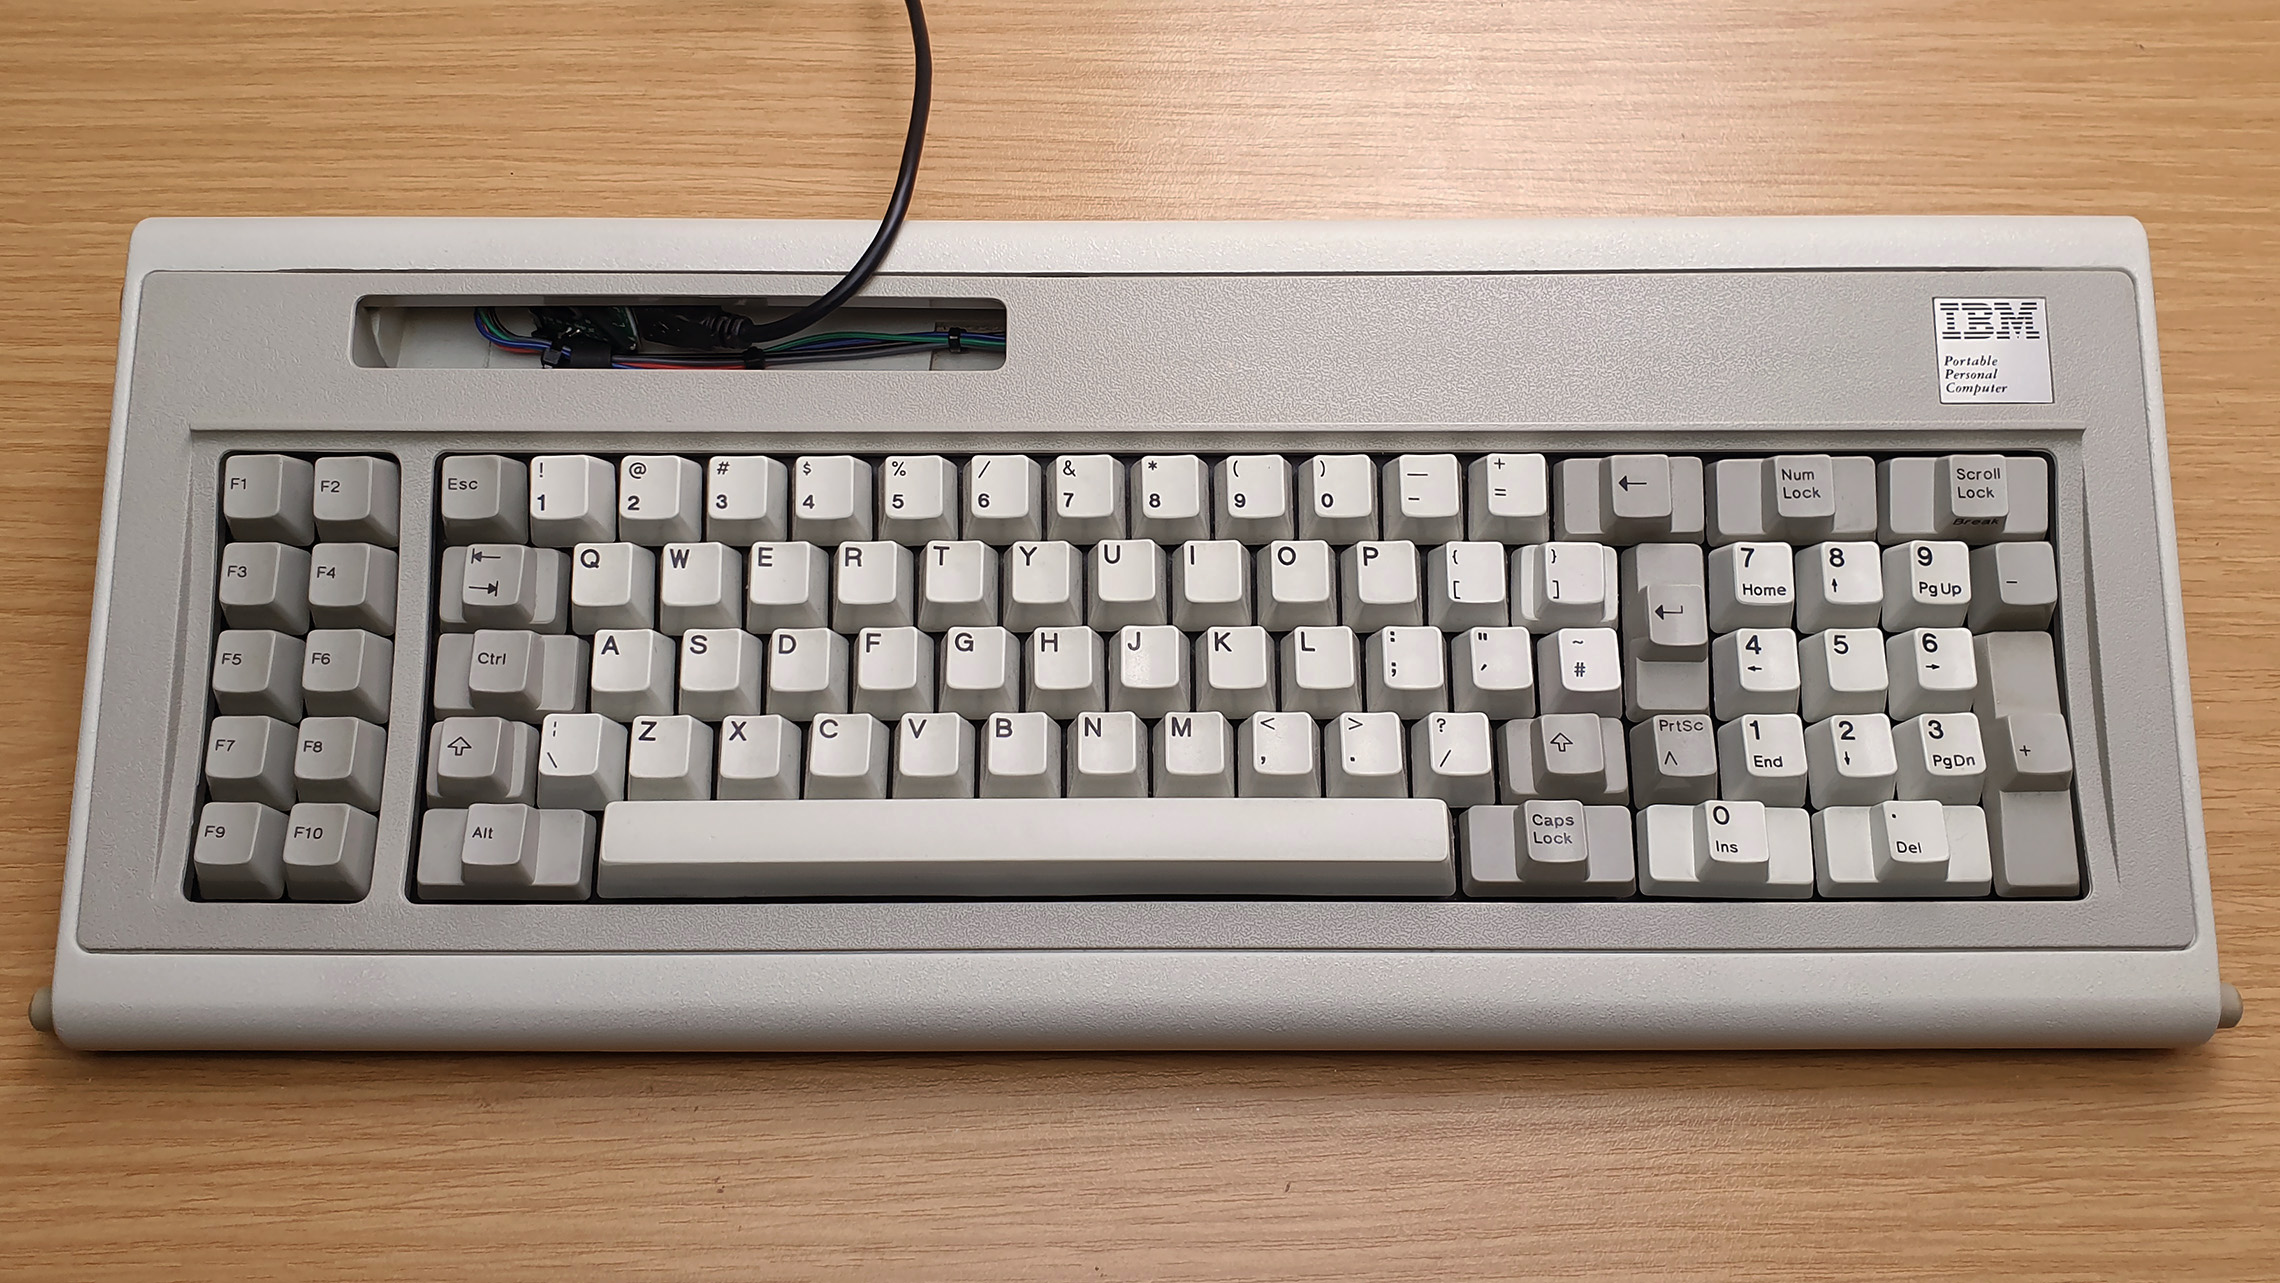 IBM Portable Personal Computer Keyboard